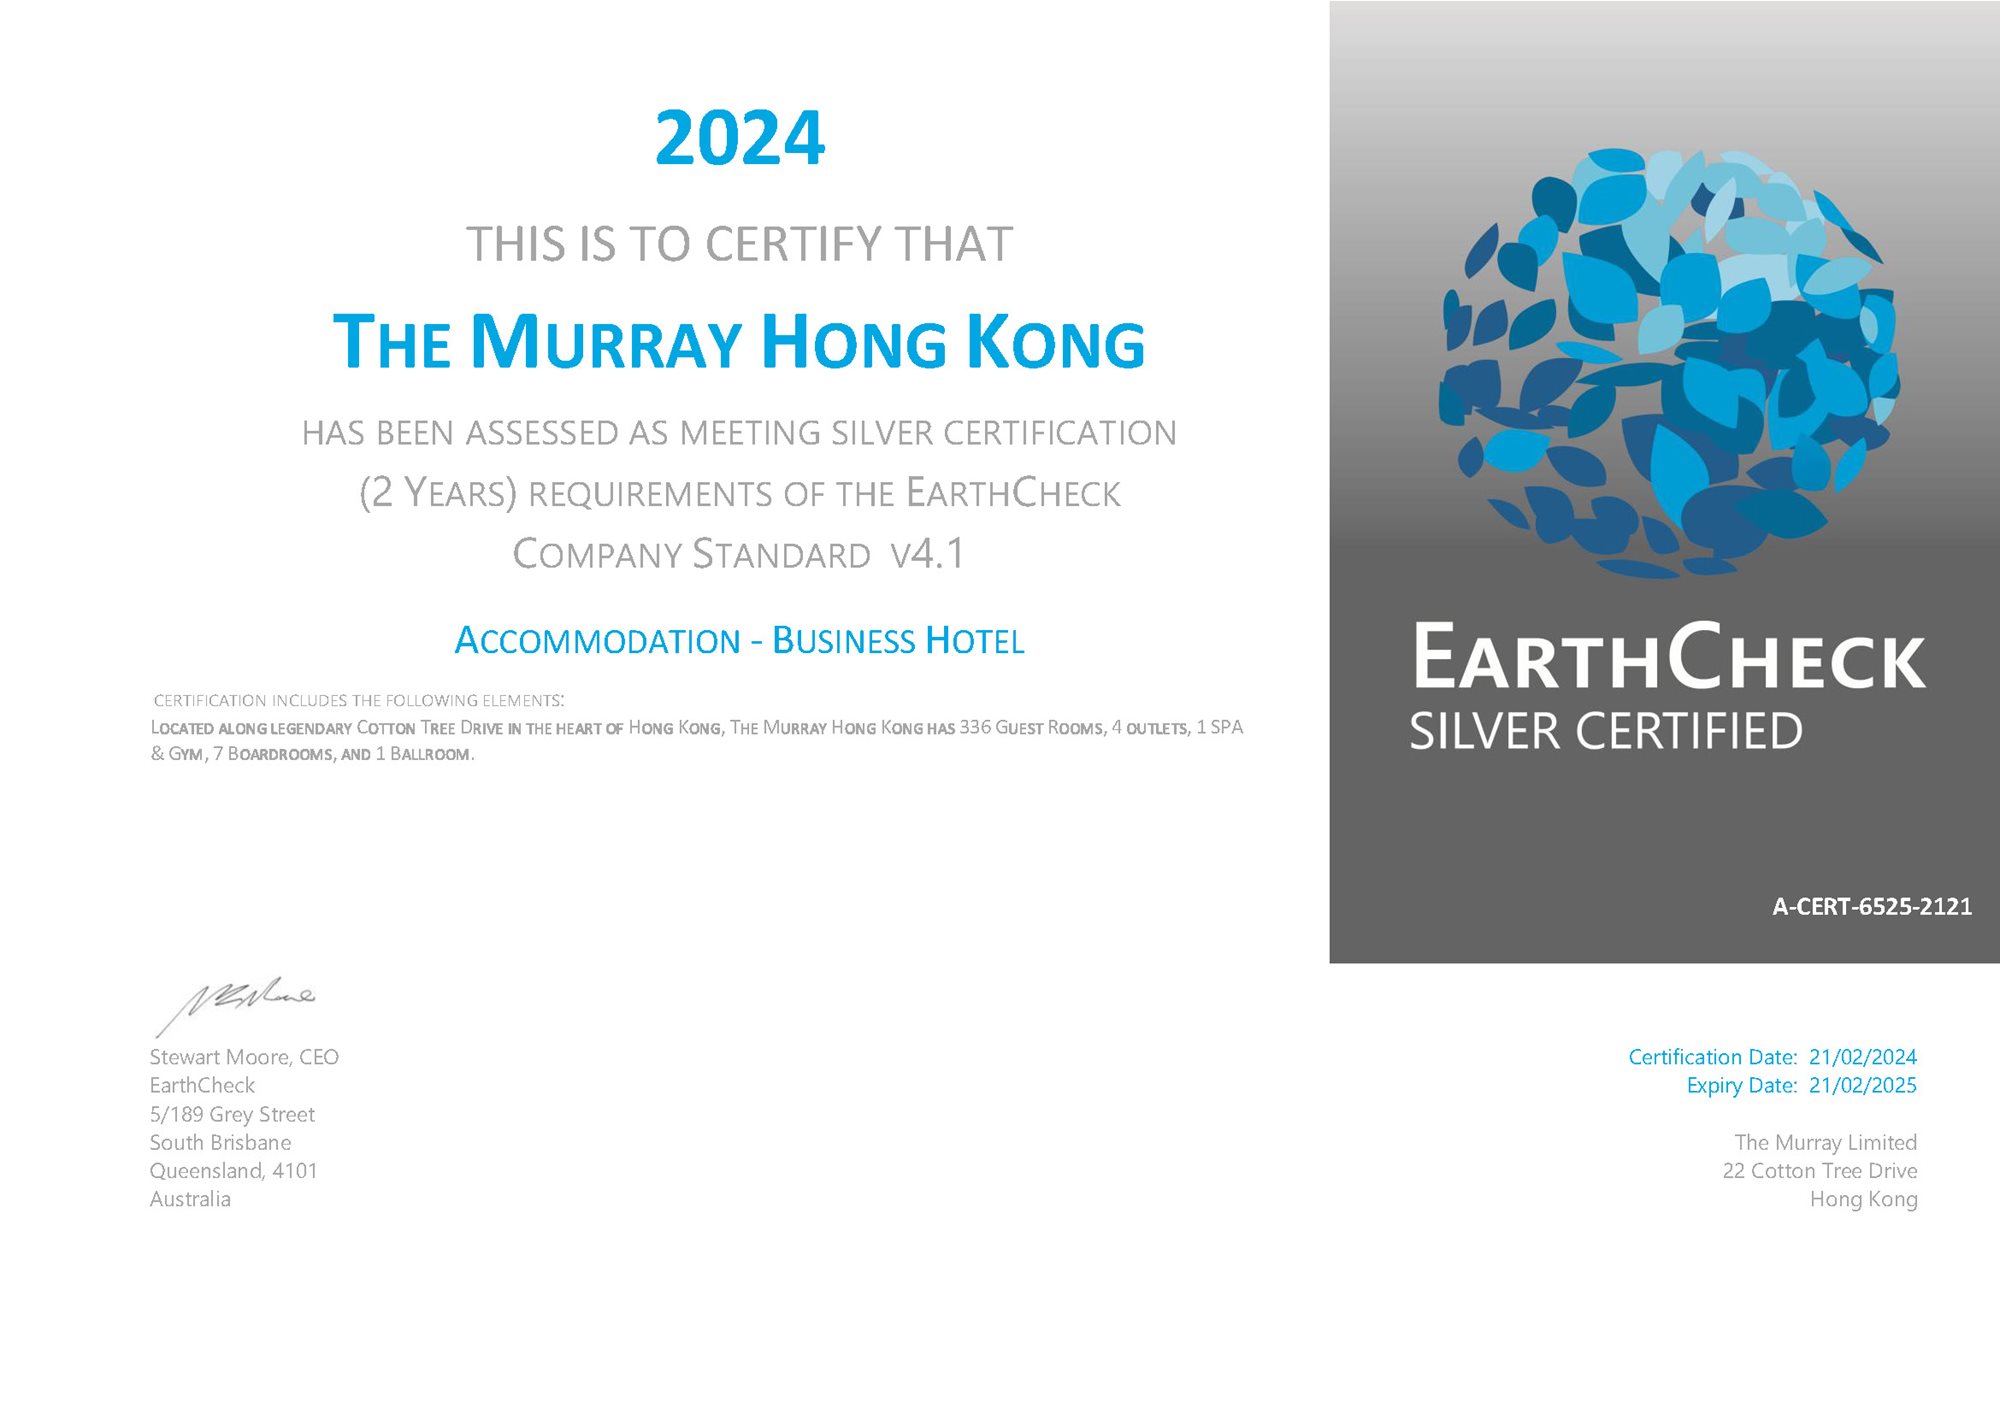 The-Murray-Hong-Kong-2024-Certified-Silver.jpg